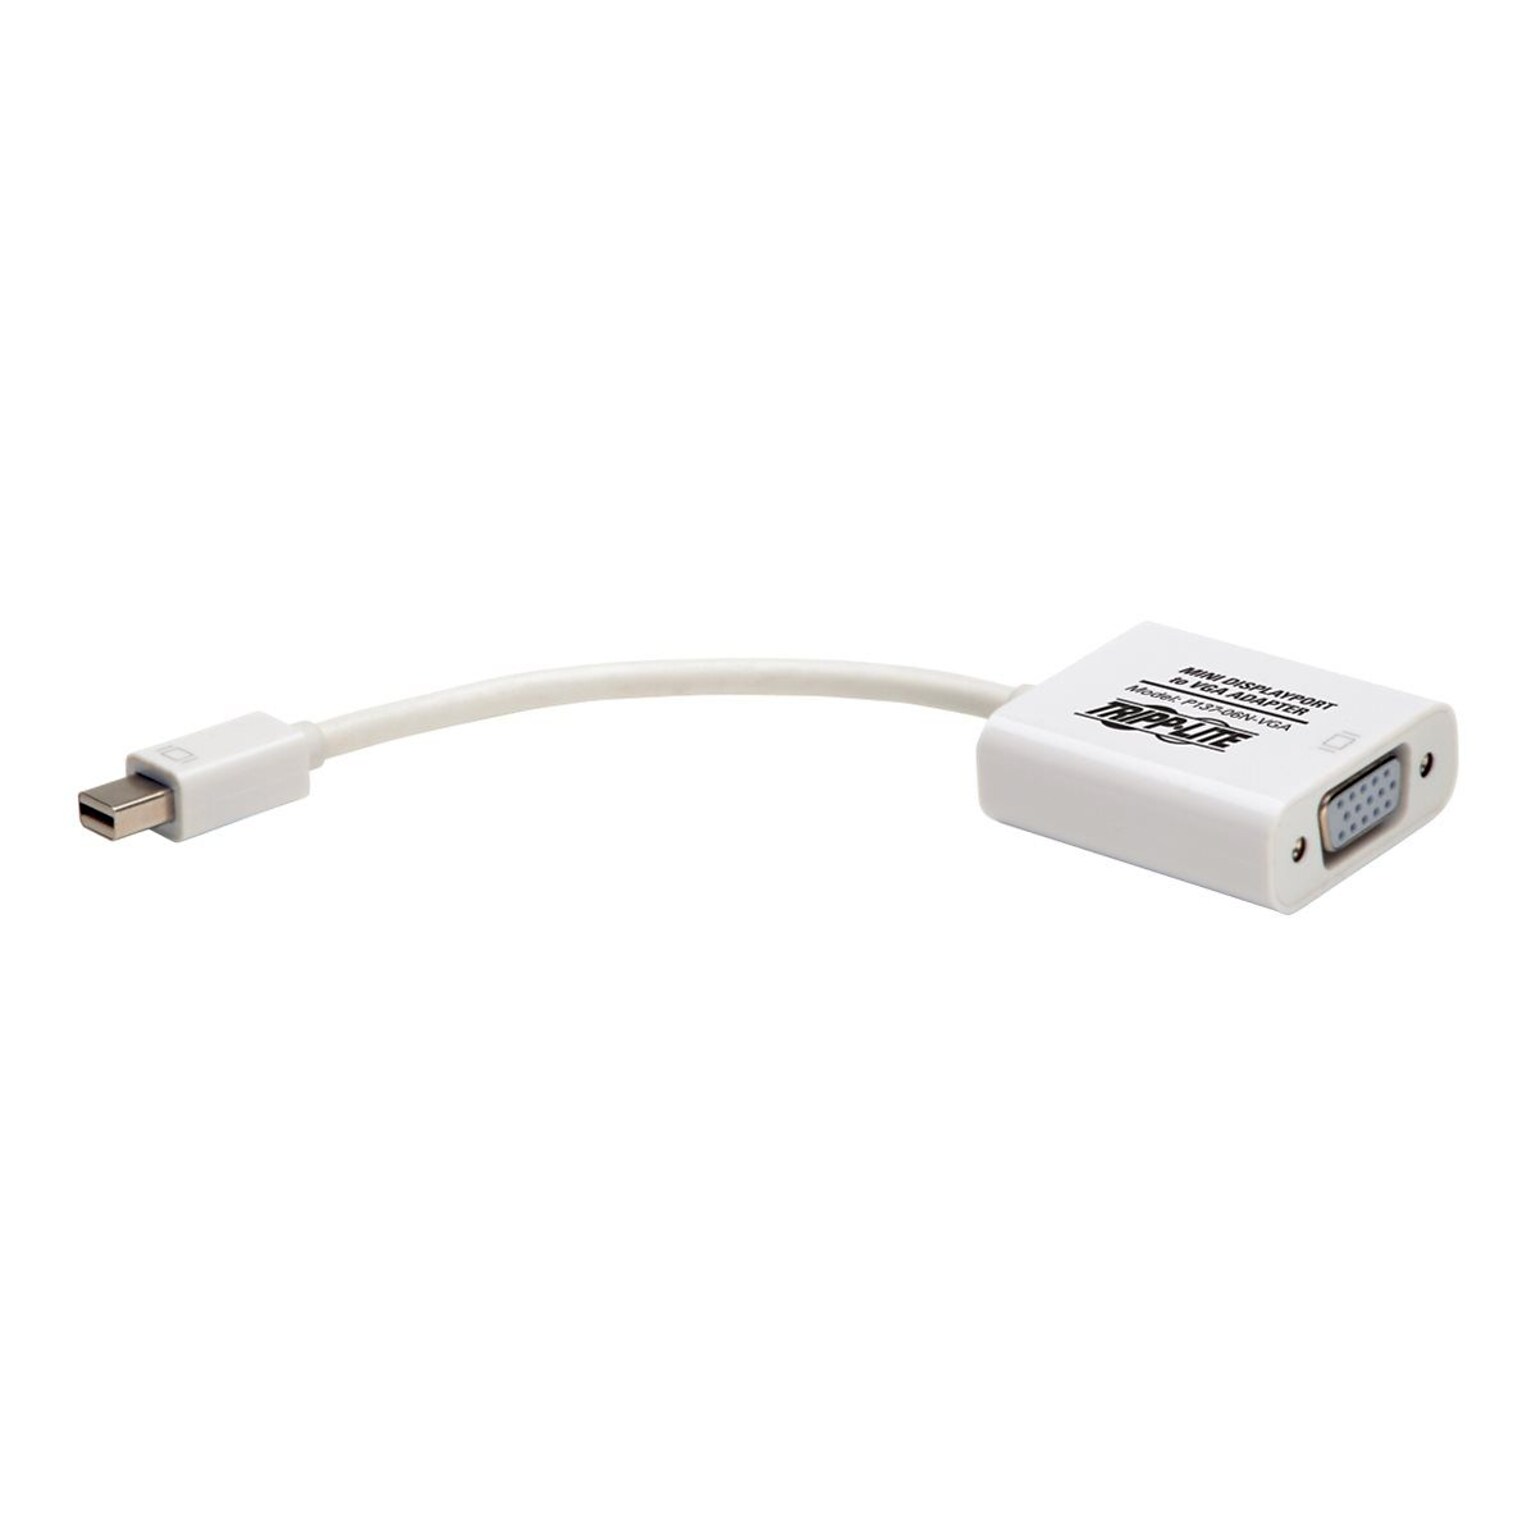 Tripp Lite P137-06N-VGA 6 Mini-DisplayPort To VGA Adapter For Mac/PC; White